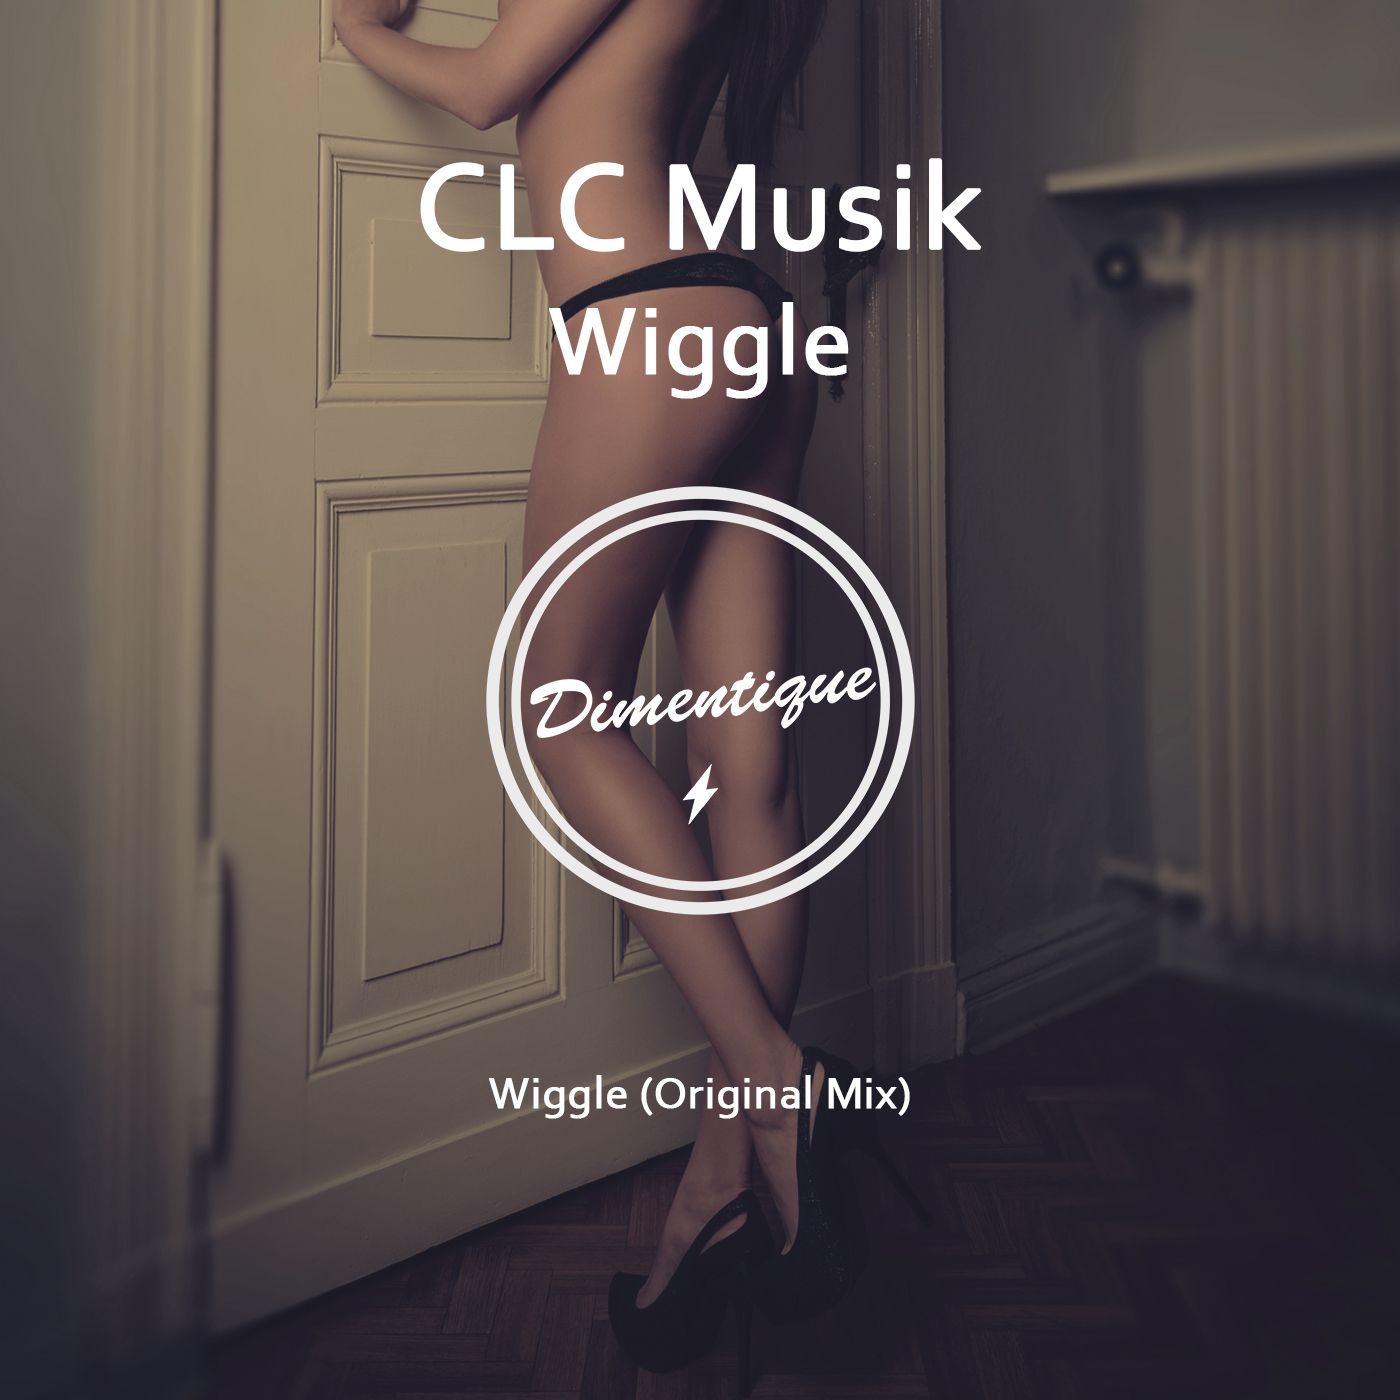 dimentique_new_art_2016_clc_musik_wiggle.jpg